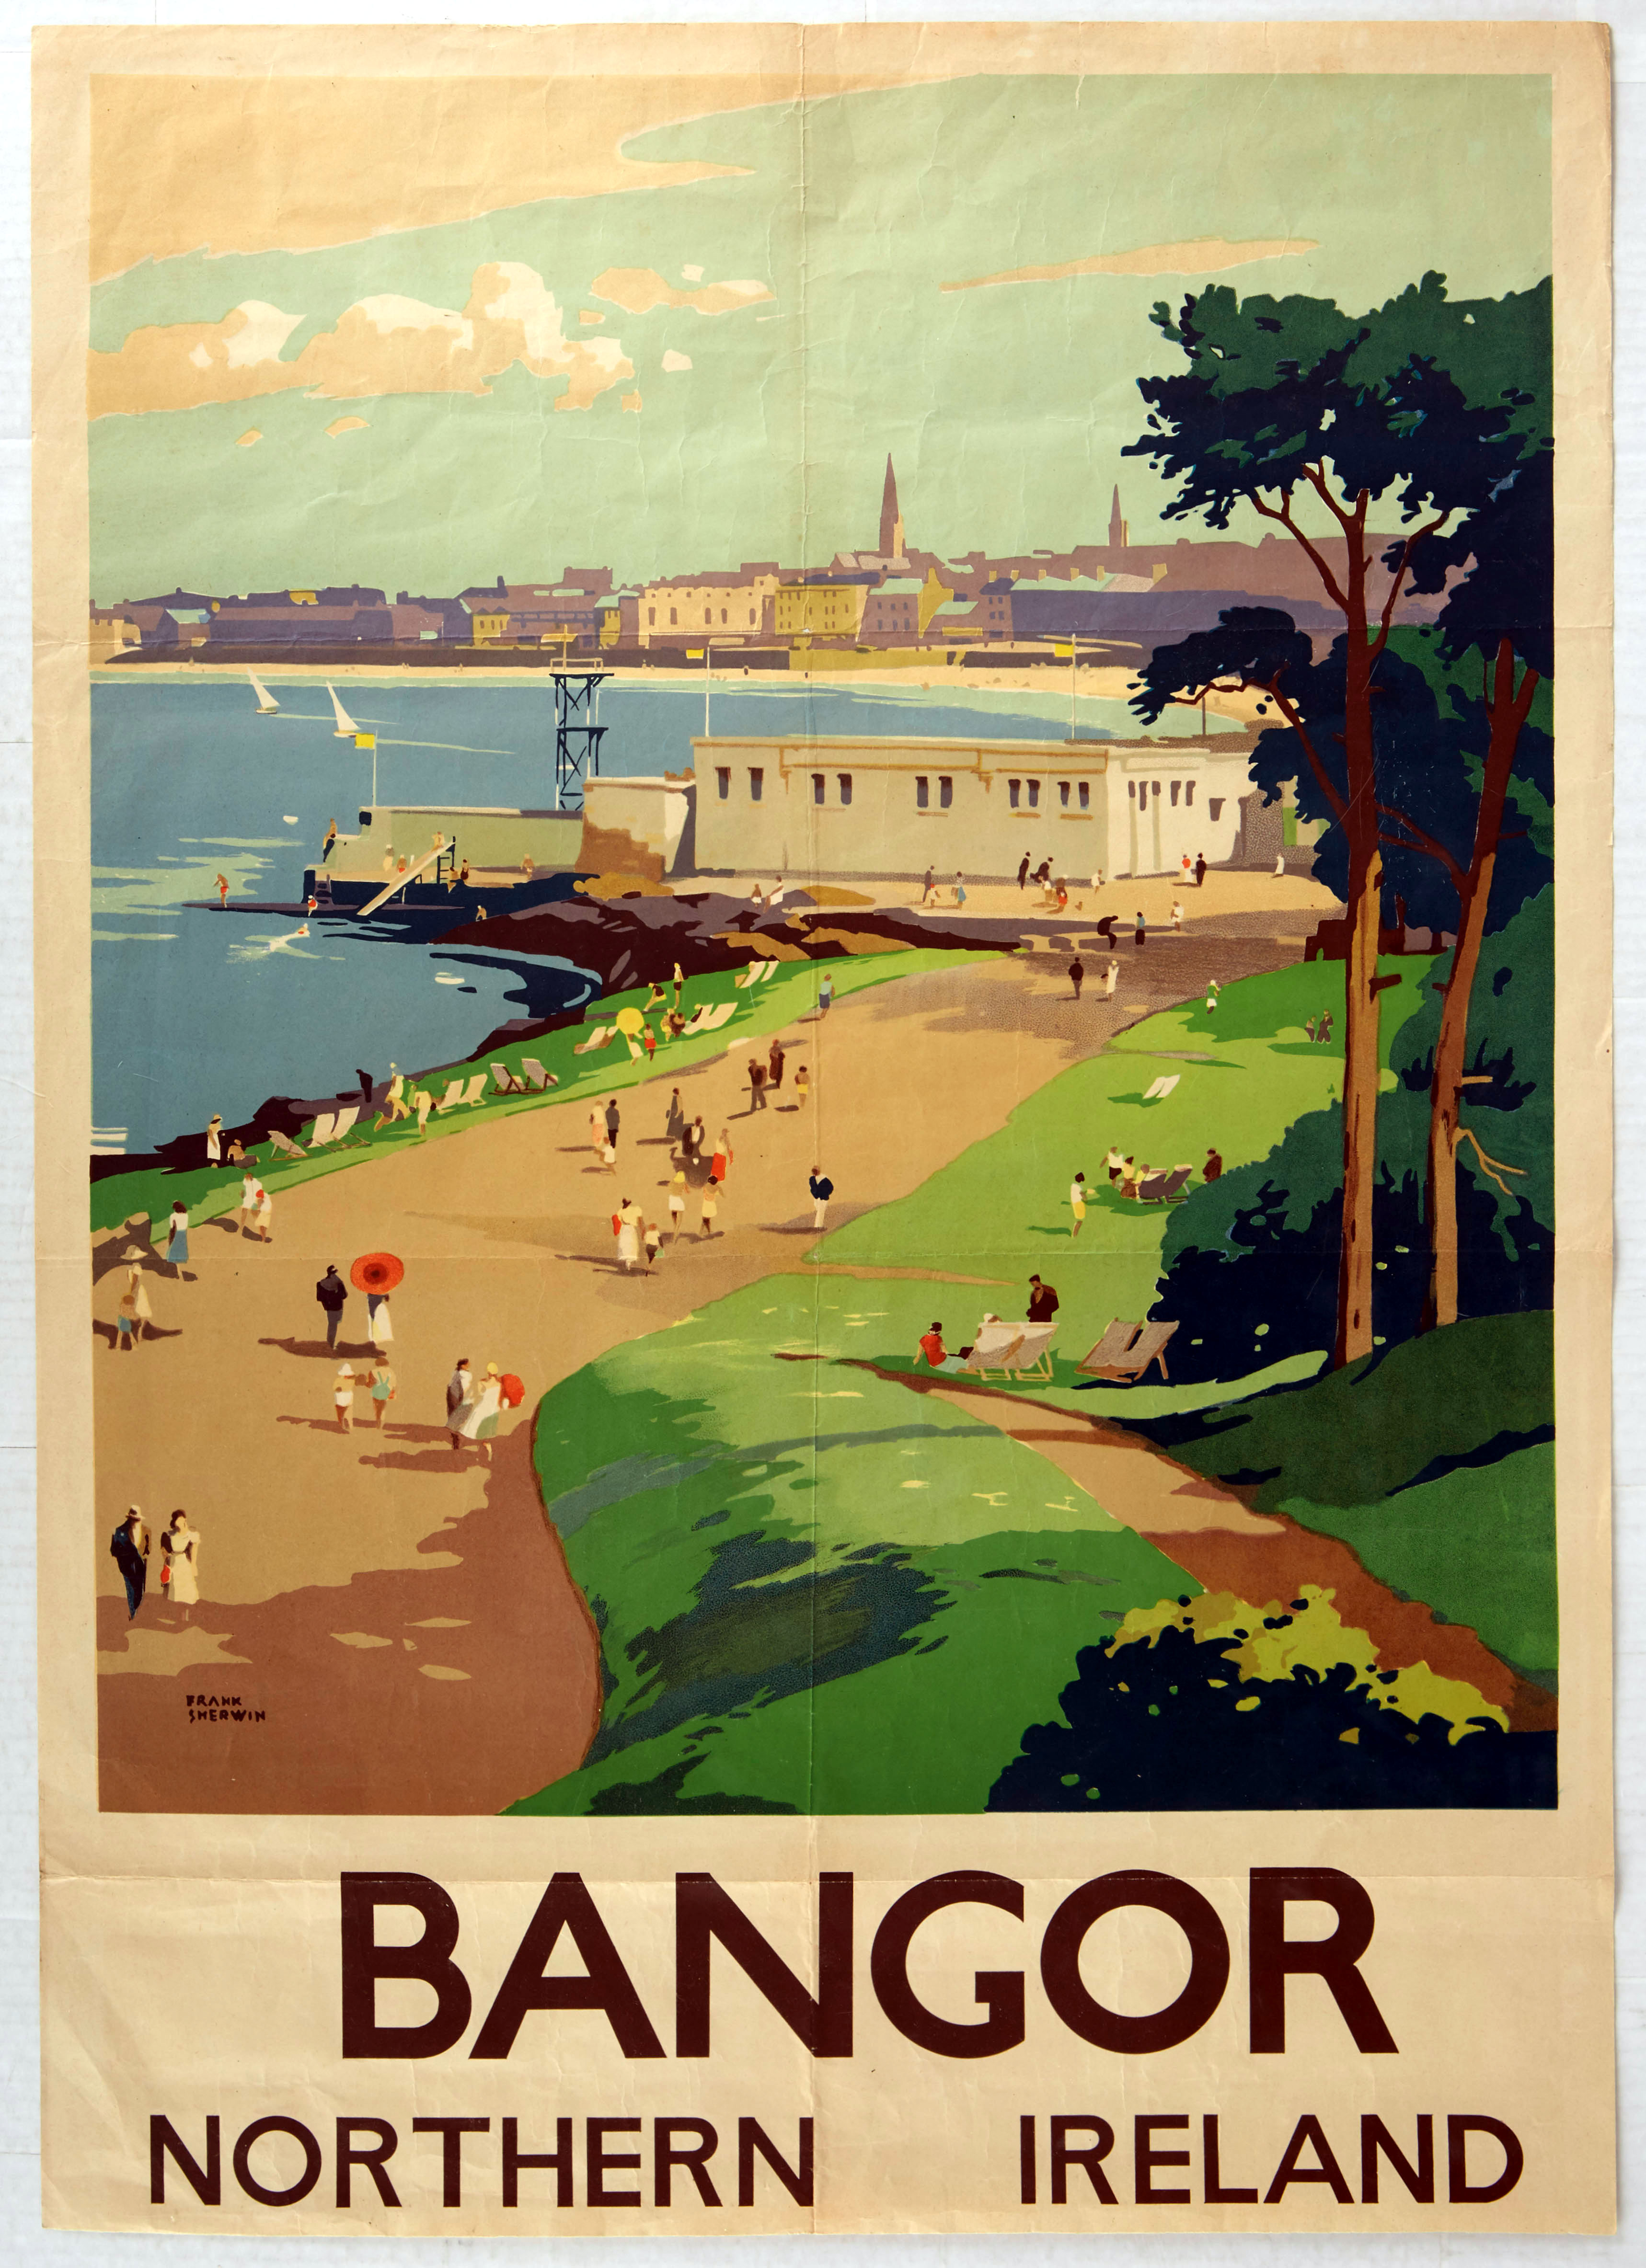 Original Travel Poster Bangor Northern Ireland British Railways